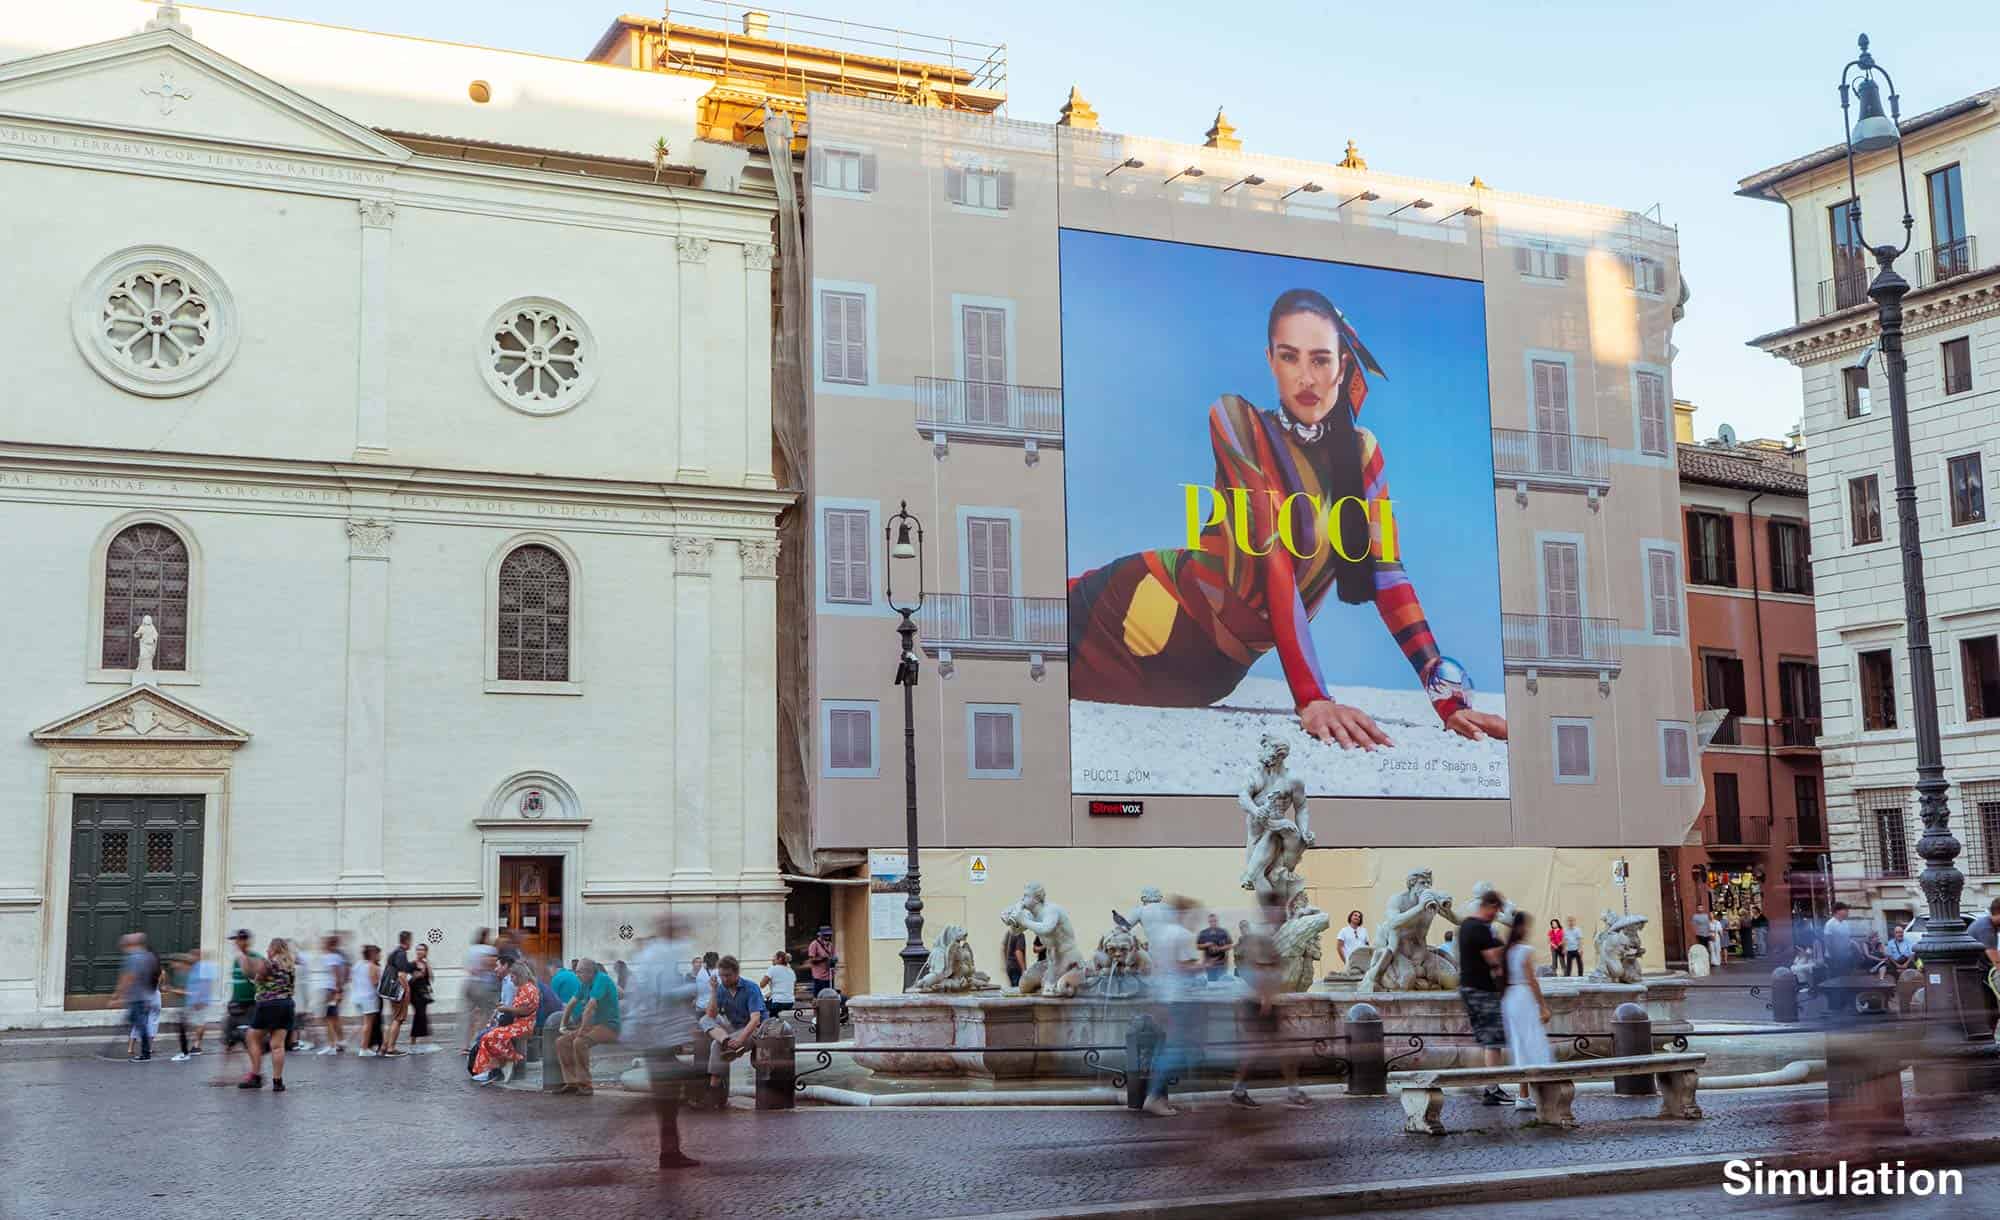 billboard in Piazza Noavona 106, Rome with Pucci (fashion)